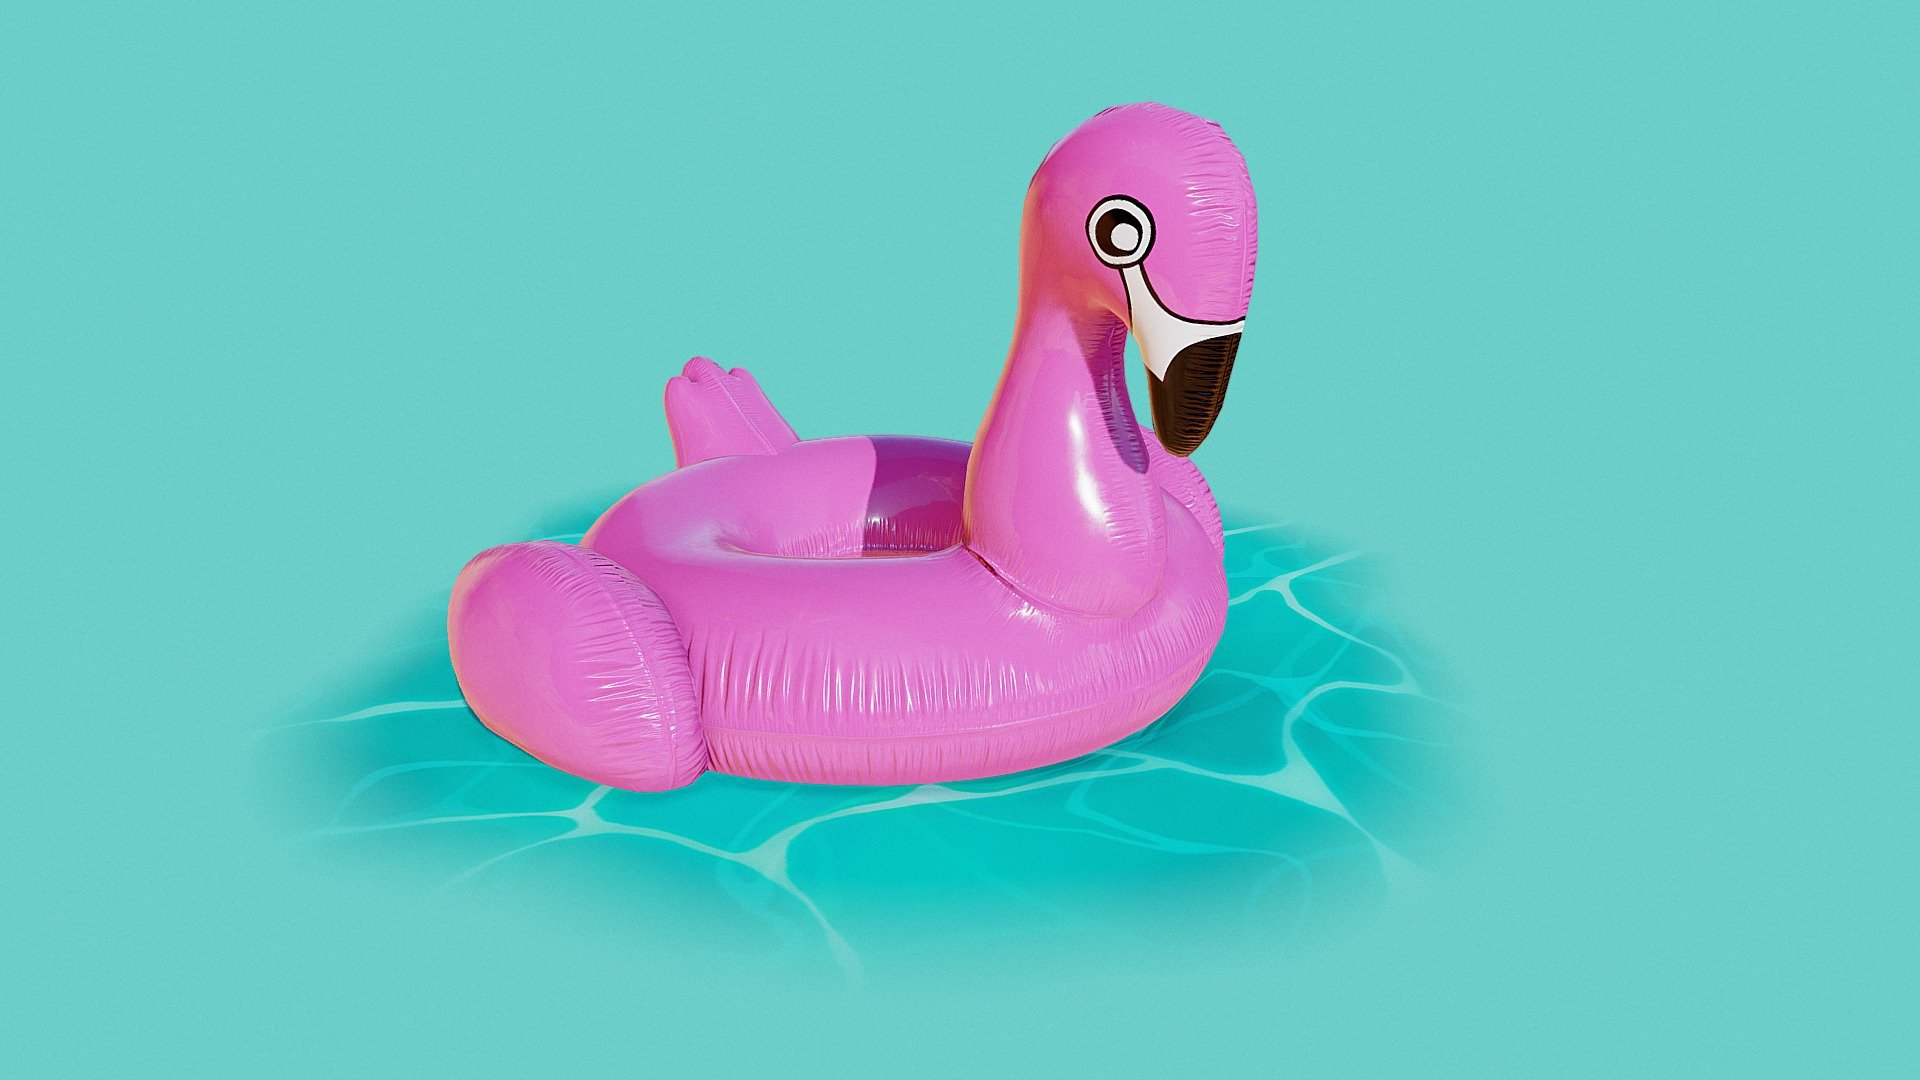 Flamingo Pool Float
Inflatable Flamingo 

Formats
* -Max
* -3DS
* -OBJ
* -FBX - Inflatable Flamingo - Buy Royalty Free 3D model by msanjurj 3d model